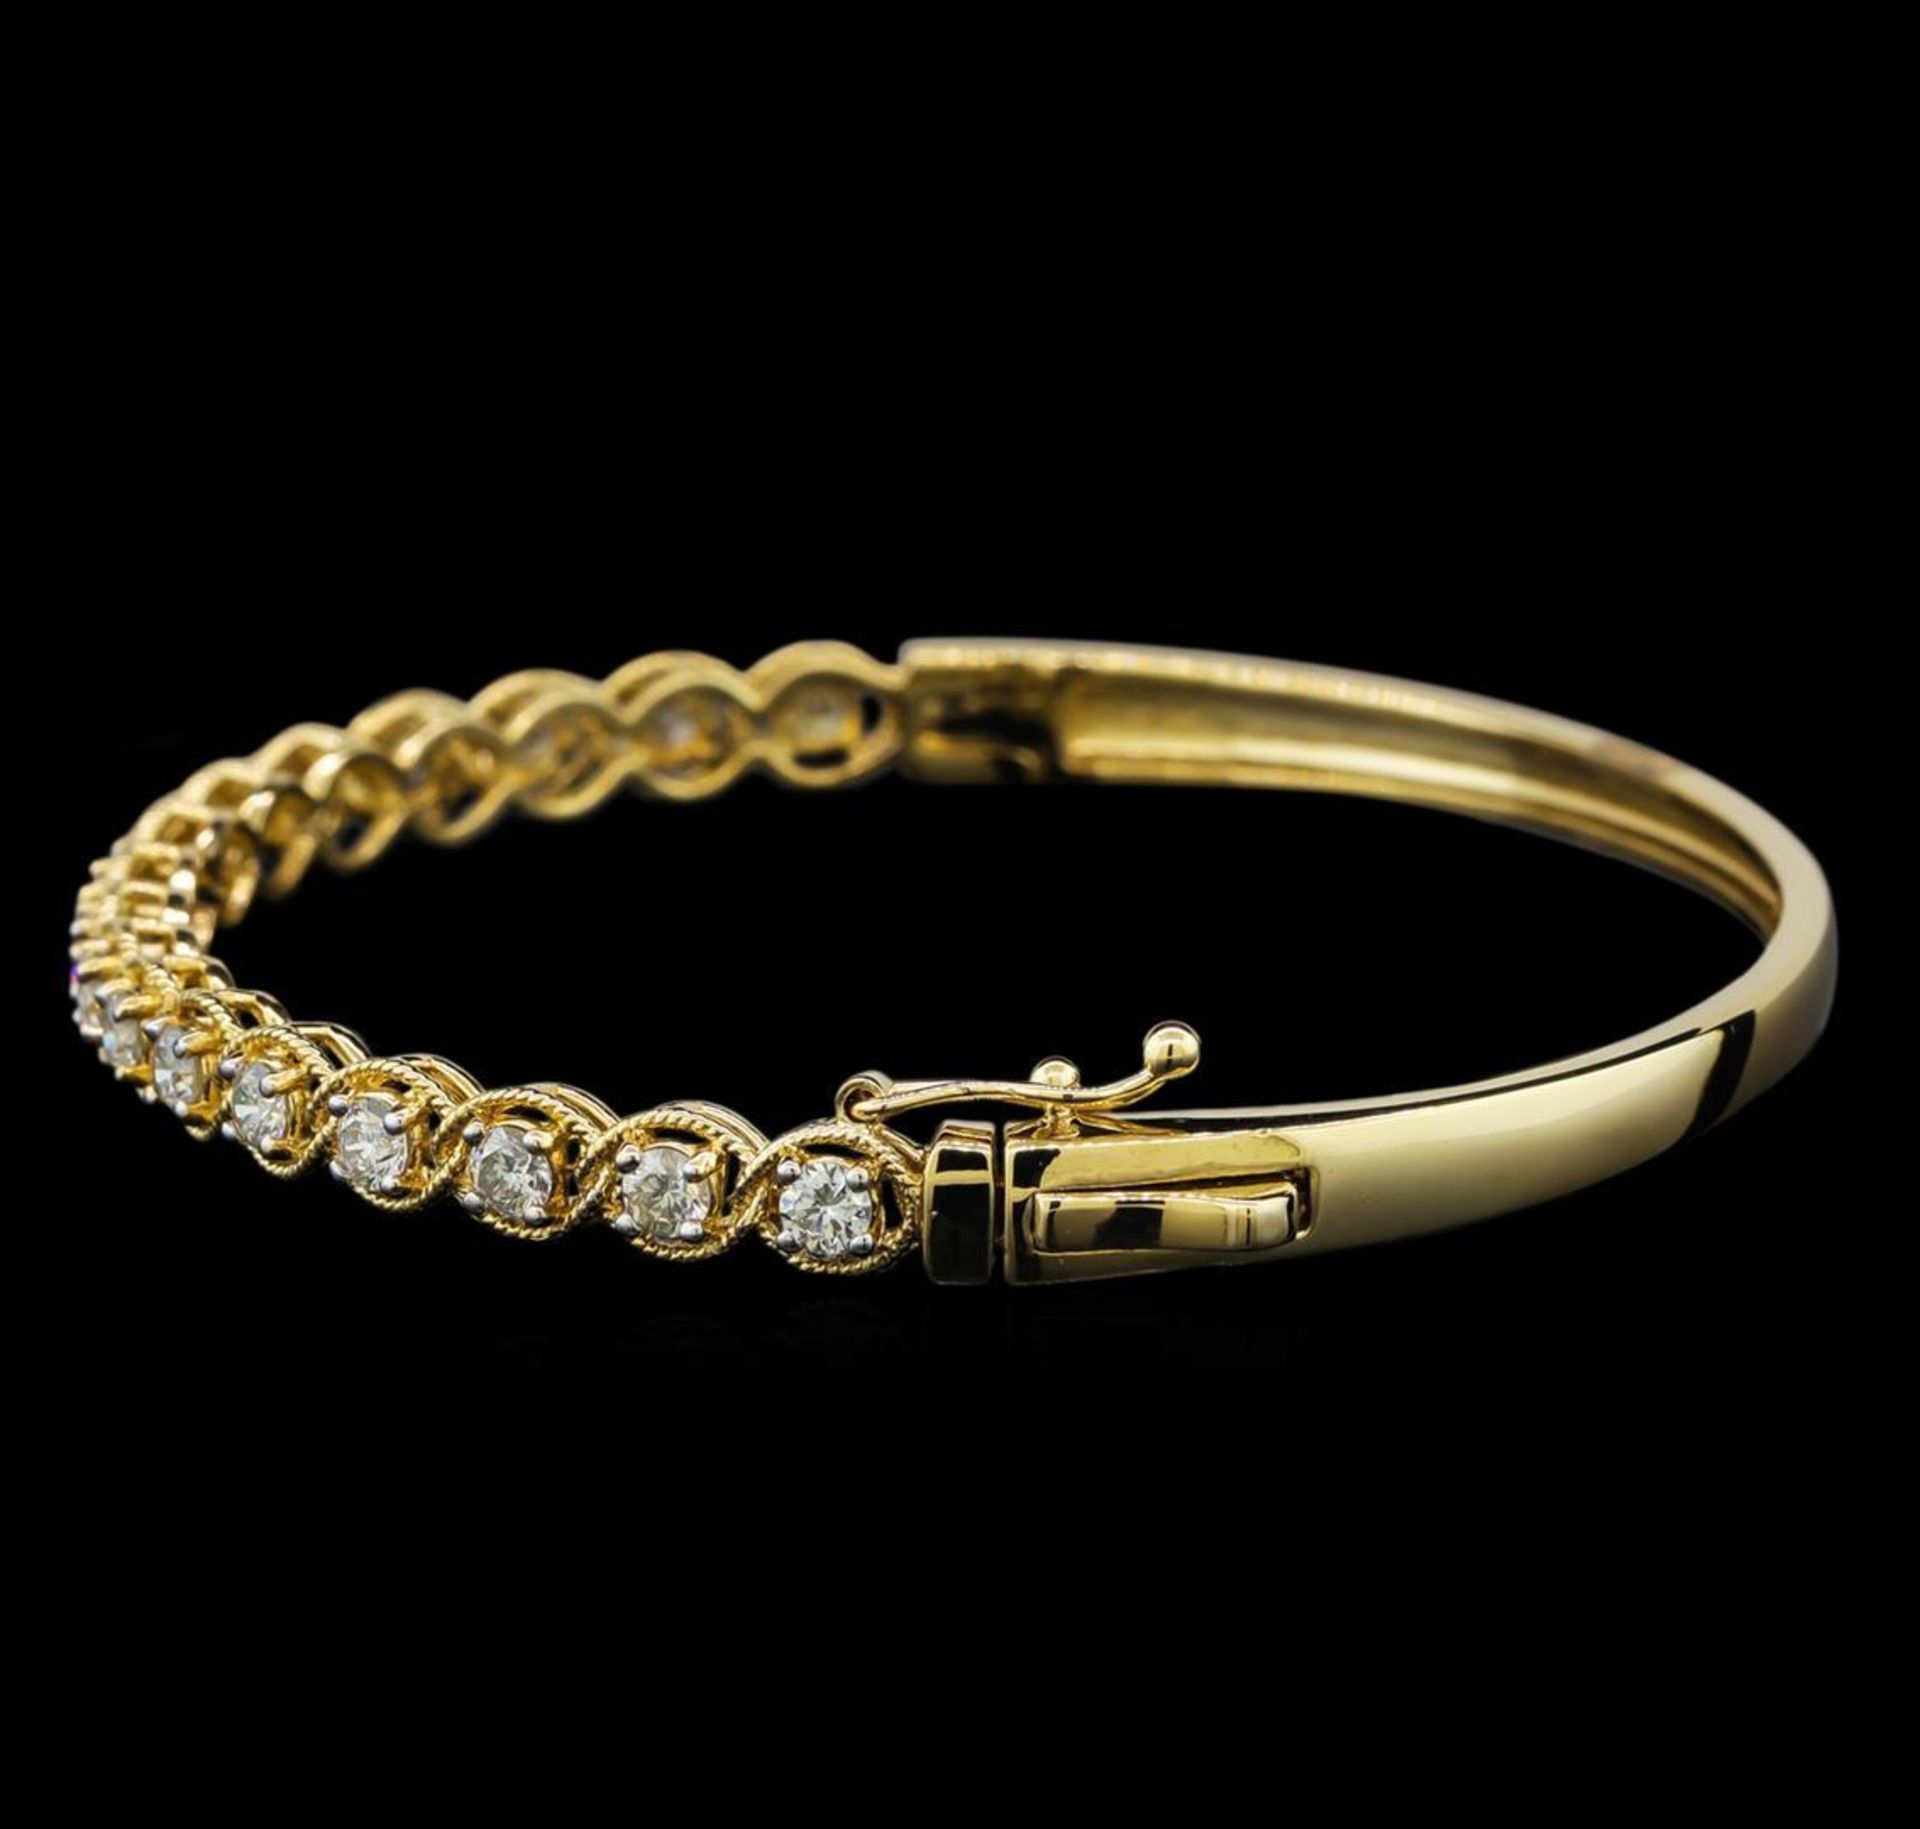 1.57 ctw Diamond Bangle Bracelet - 14KT Yellow Gold - Image 2 of 4